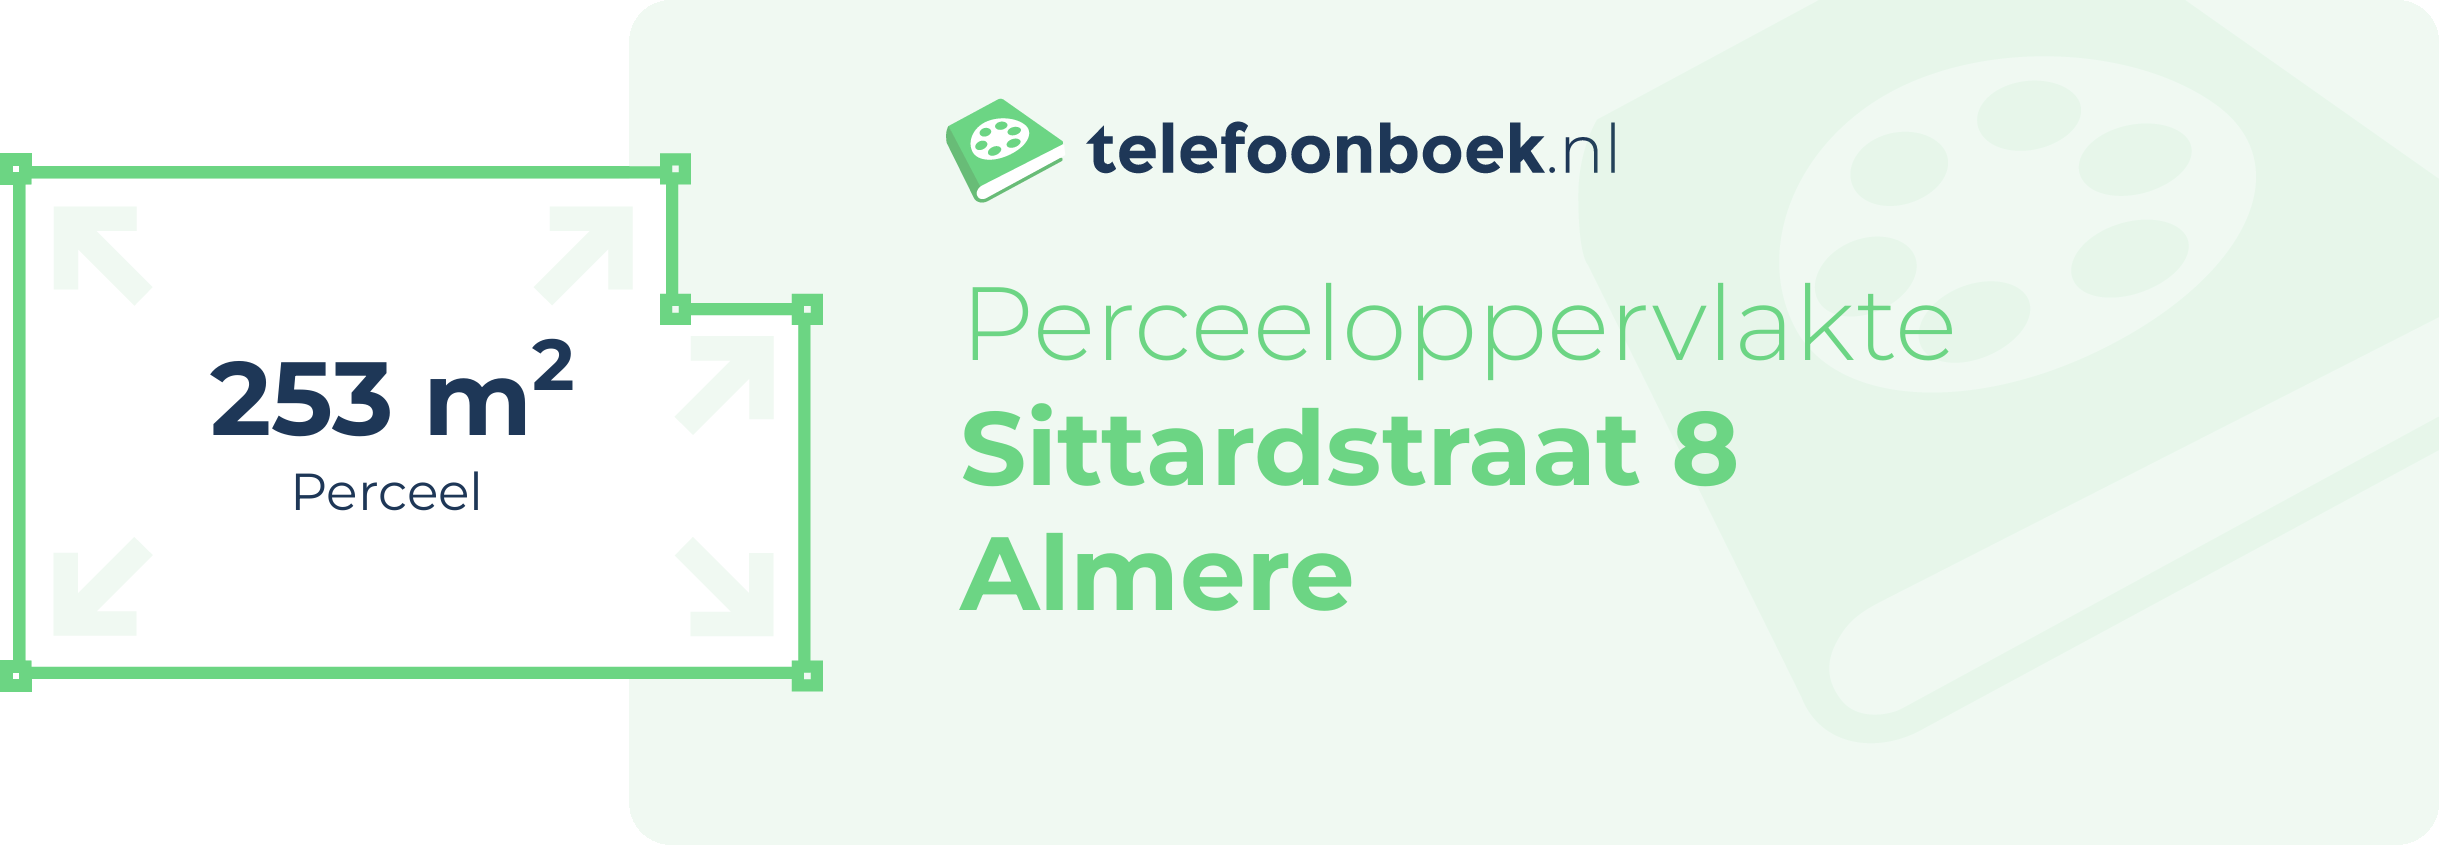 Perceeloppervlakte Sittardstraat 8 Almere